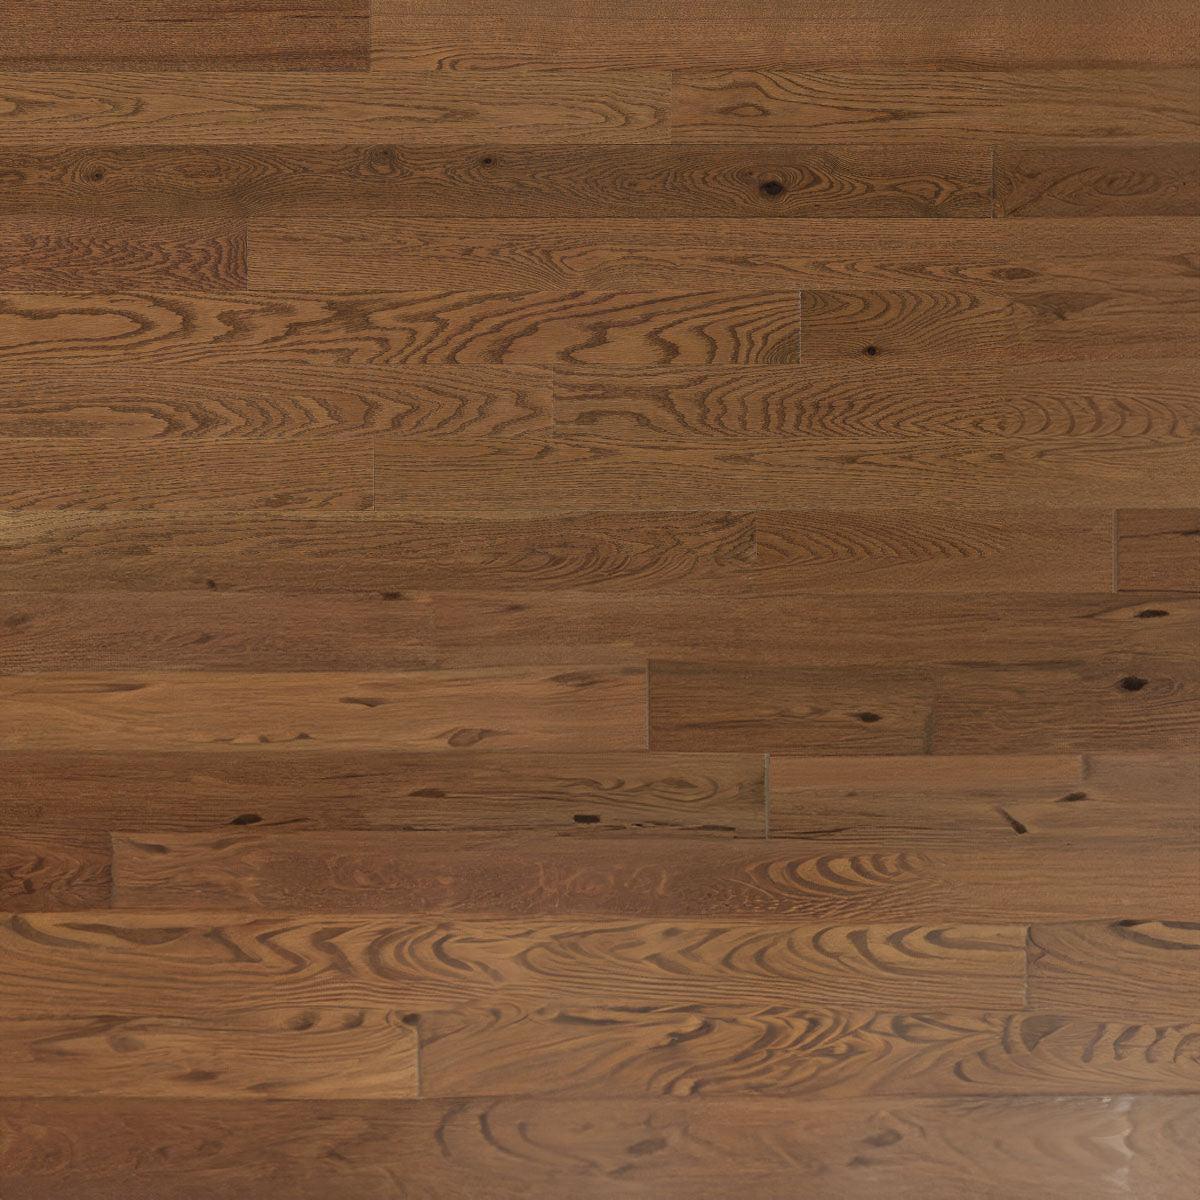 Honey Maple Solid Hardwood Flooring - Wheat - 4 3/4